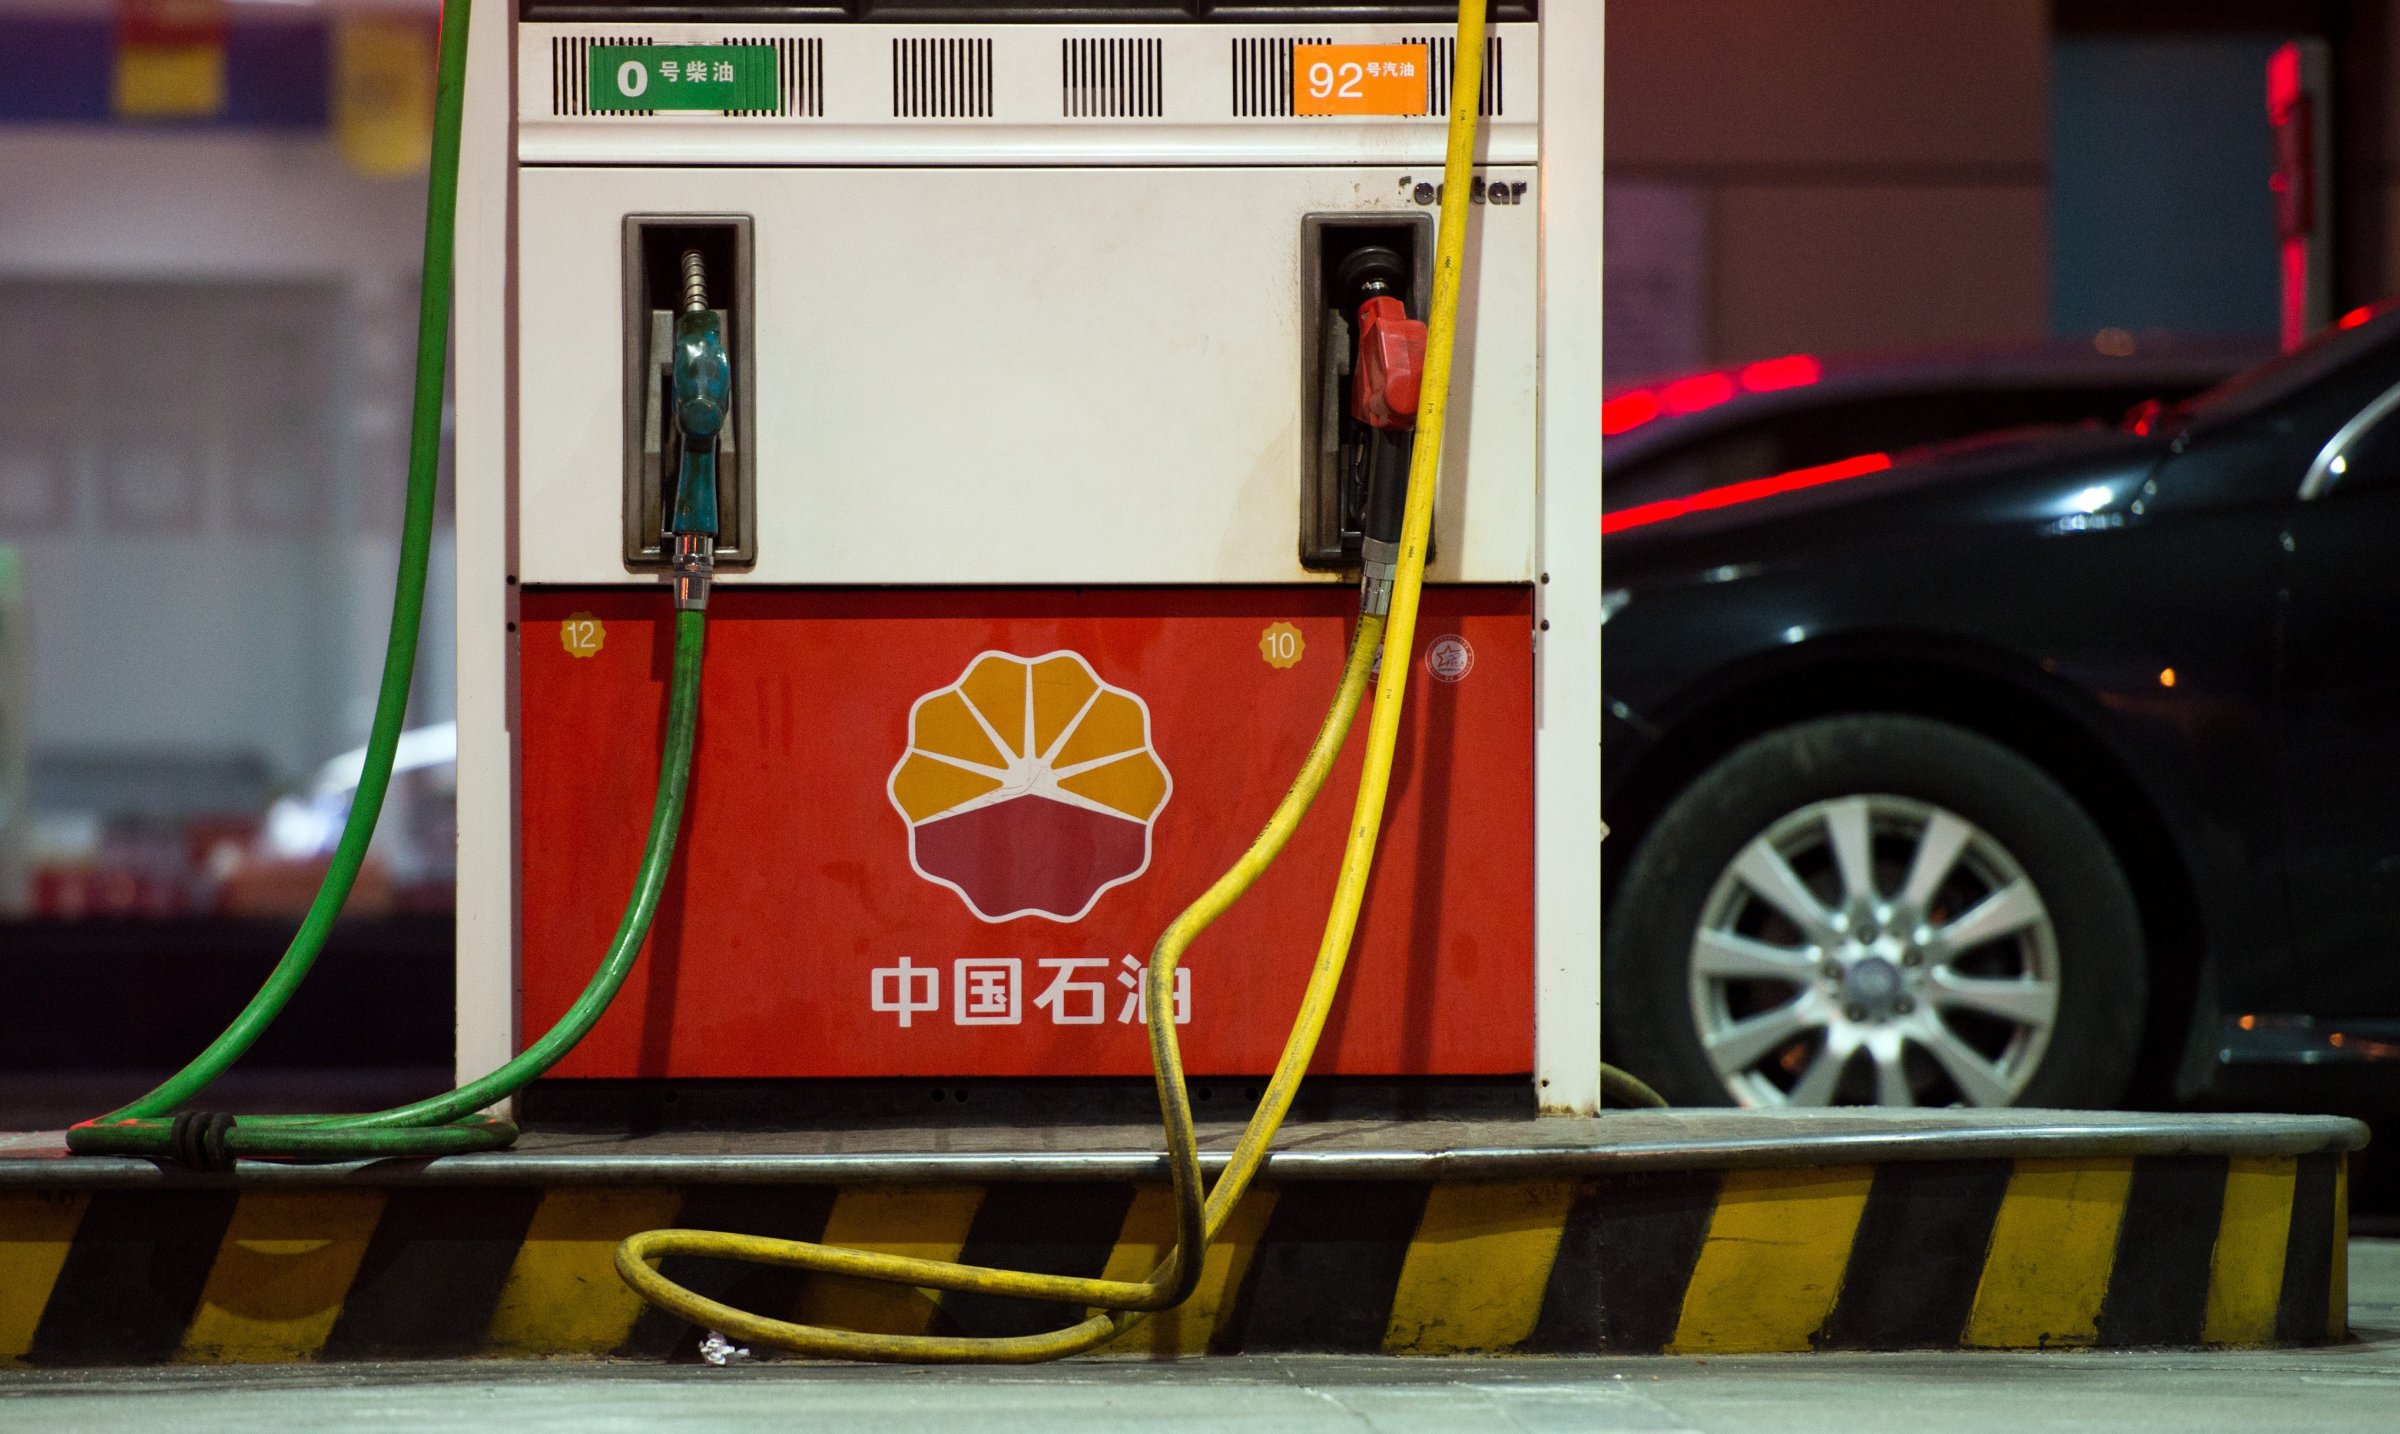 A PetroChina petrol station in Shanghai.